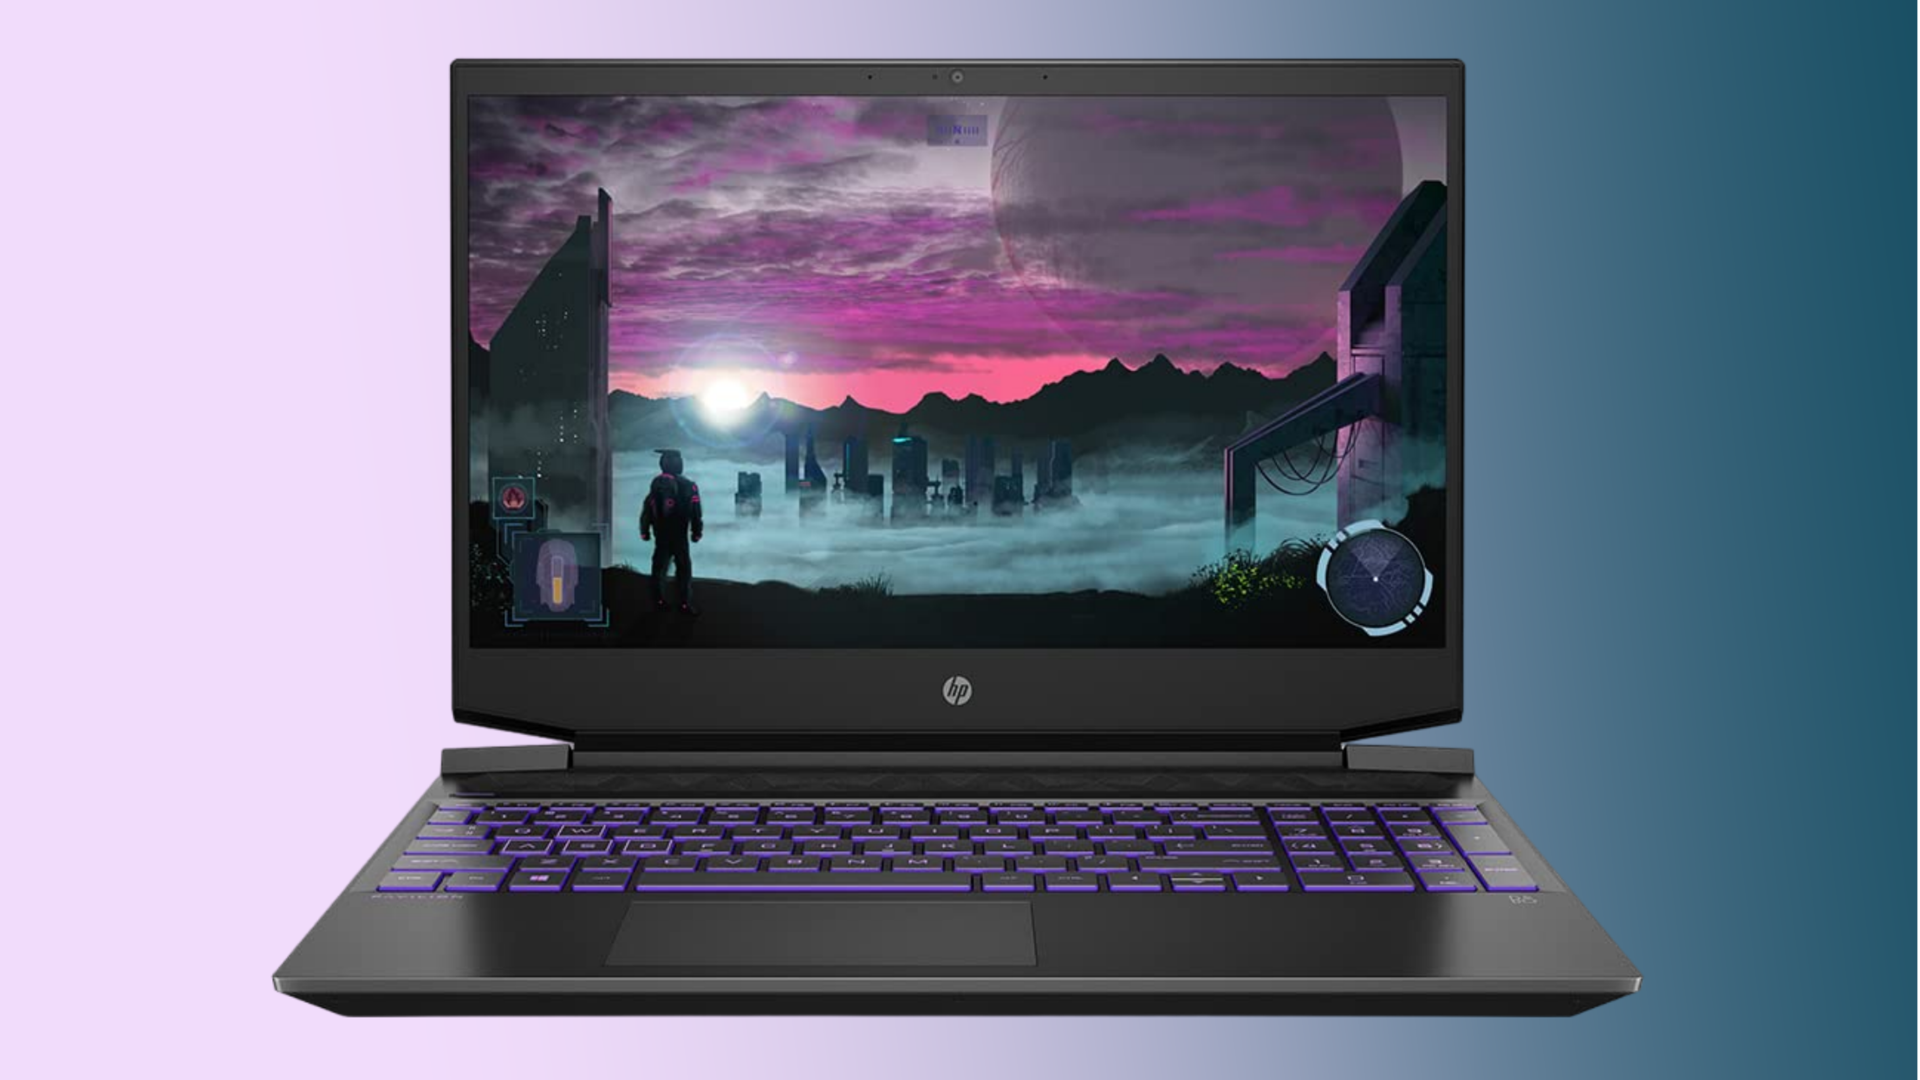 HP's Pavilion series gaming laptop is now cheaper on Flipkart